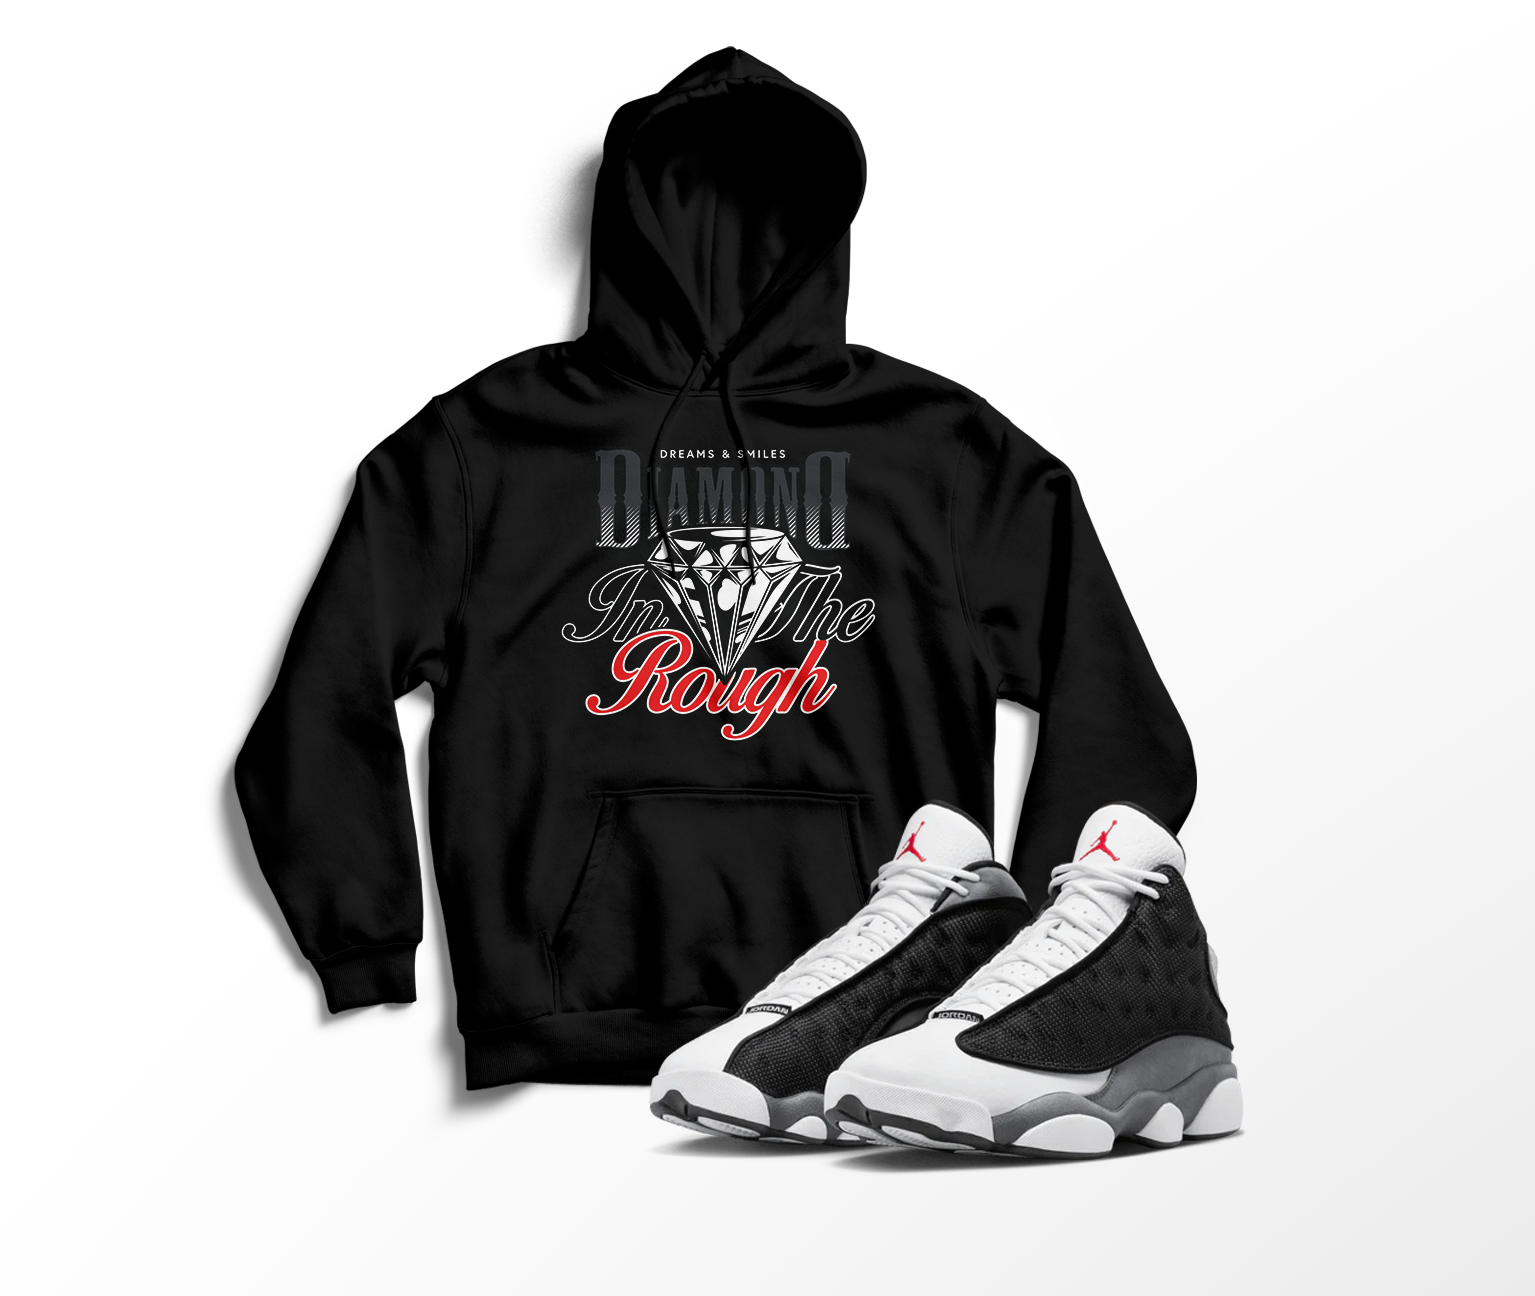 'Diamond In The Rough' Custom Graphic Hoodie To Match Air Jordan 13 Black Flint